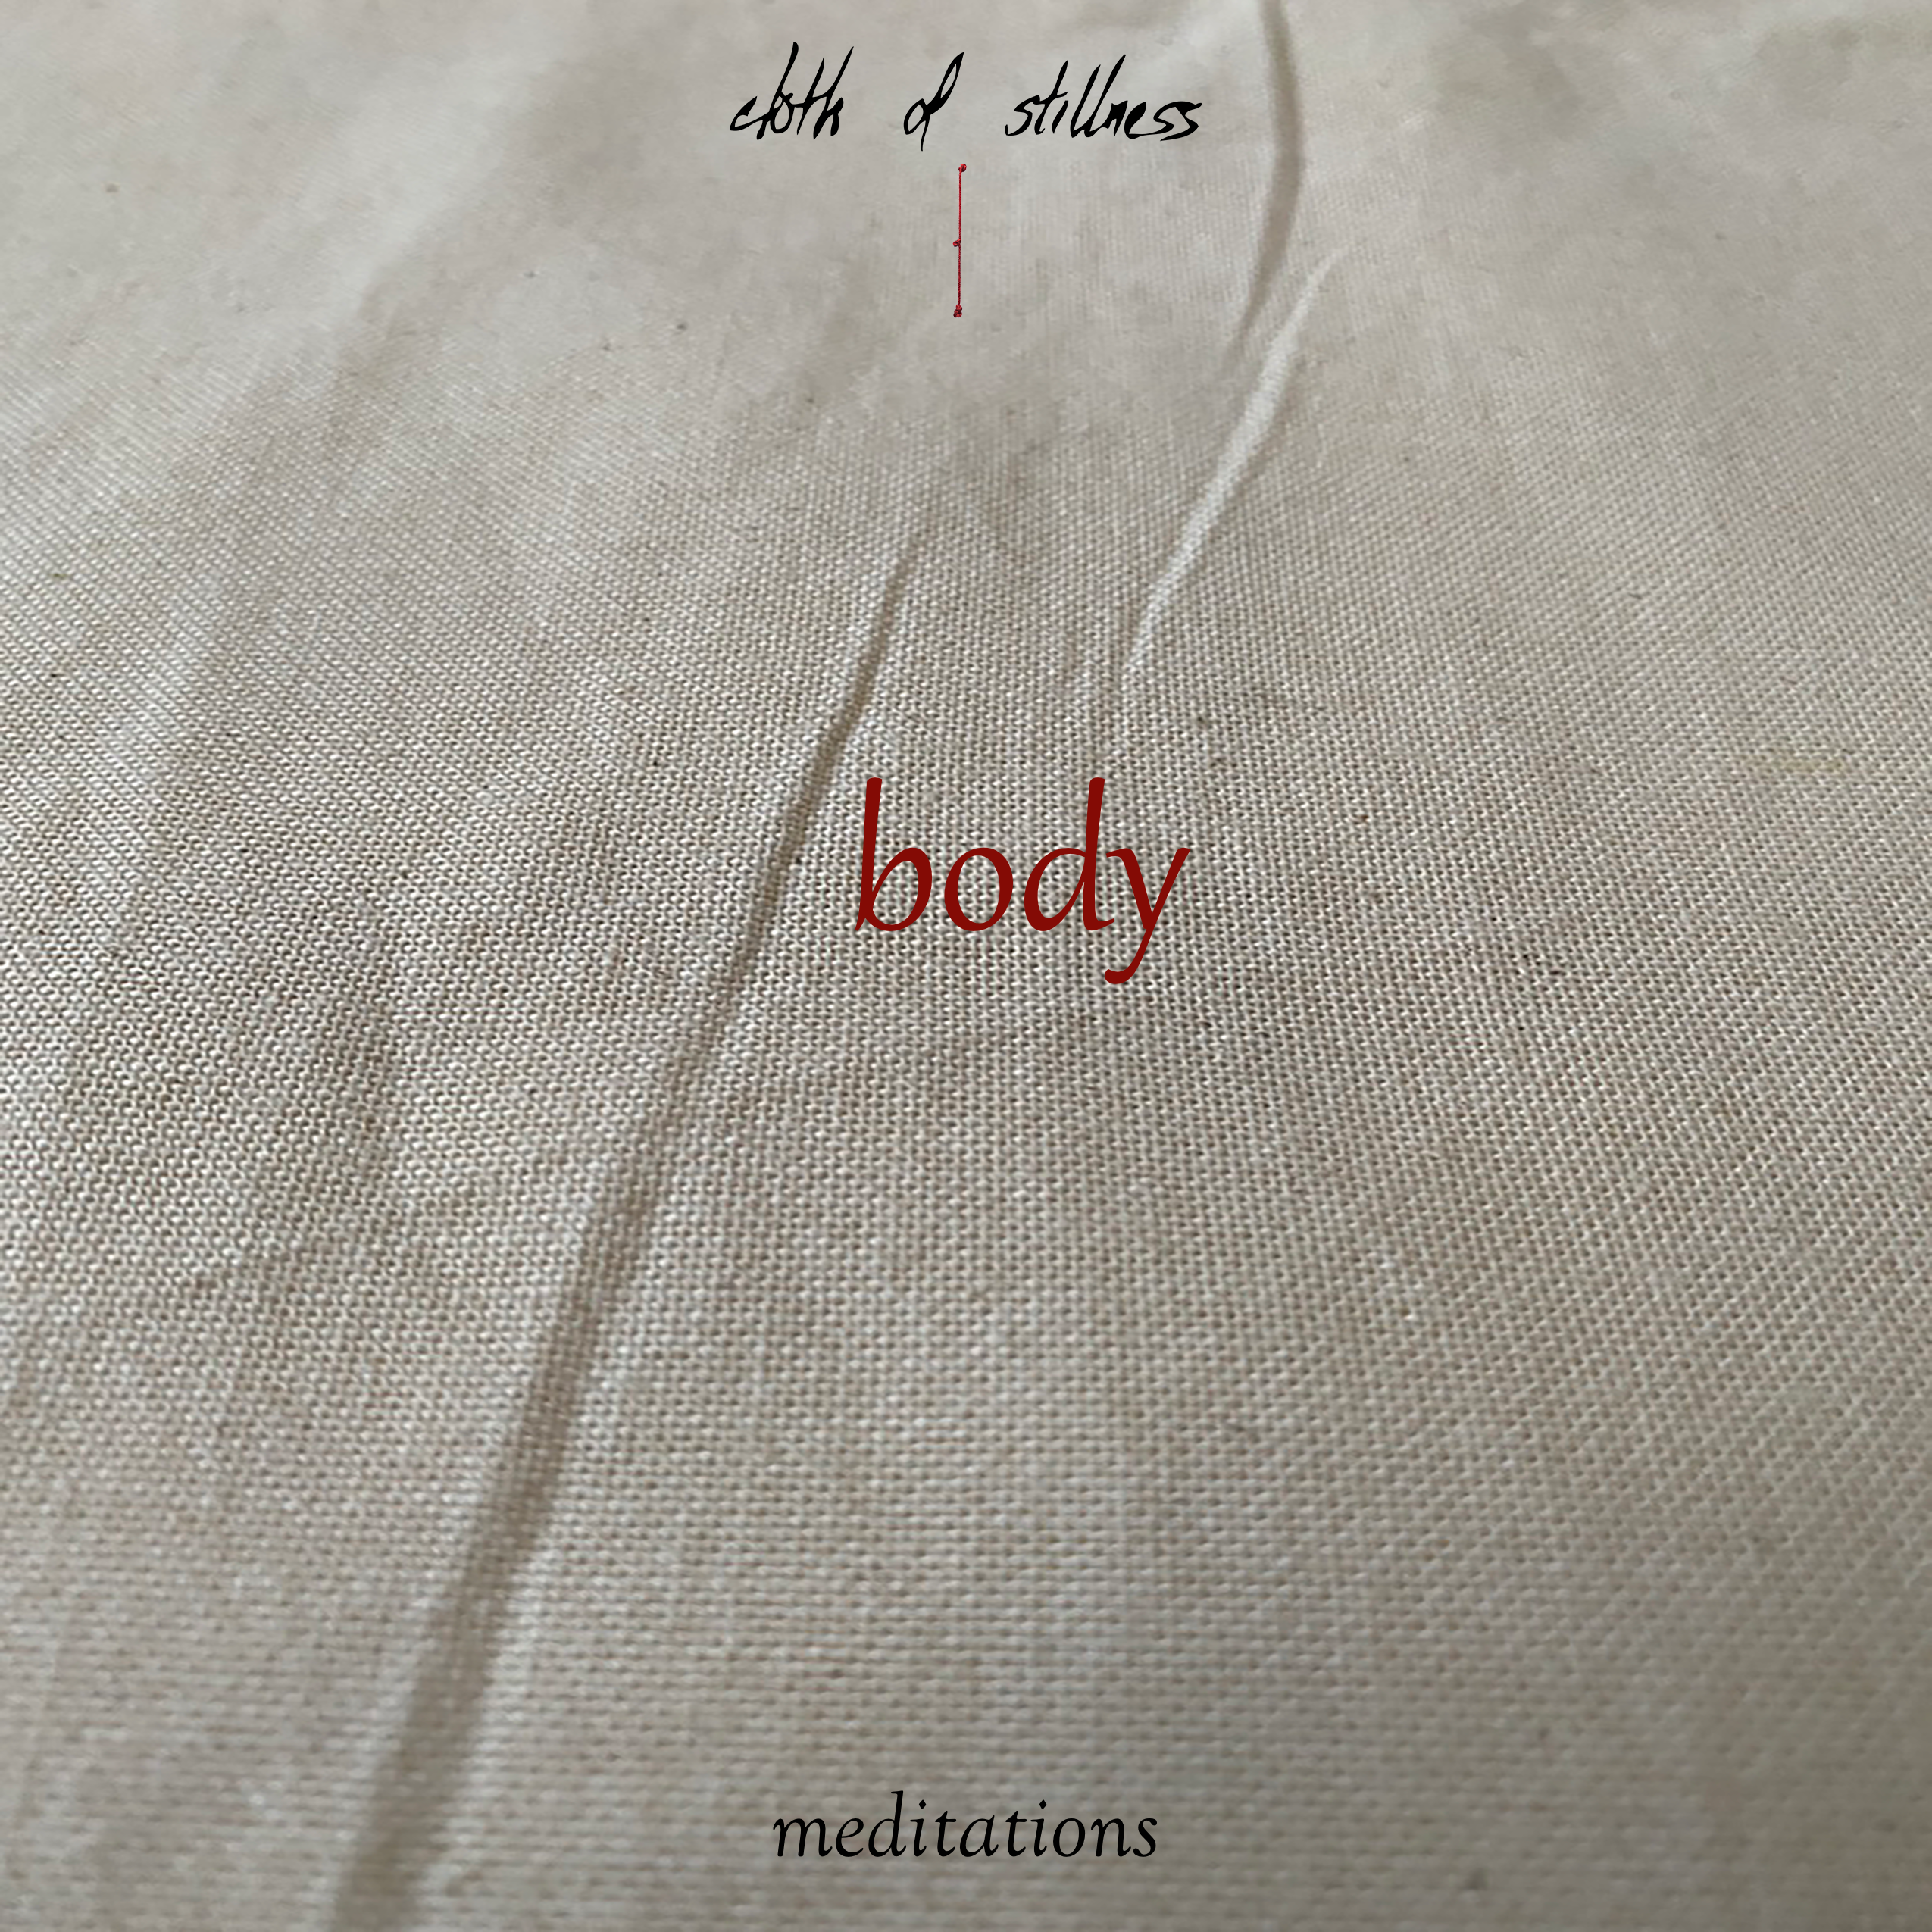 cloth of stillness meditations by kien chu...body...5...1.8.2021...ready to buy